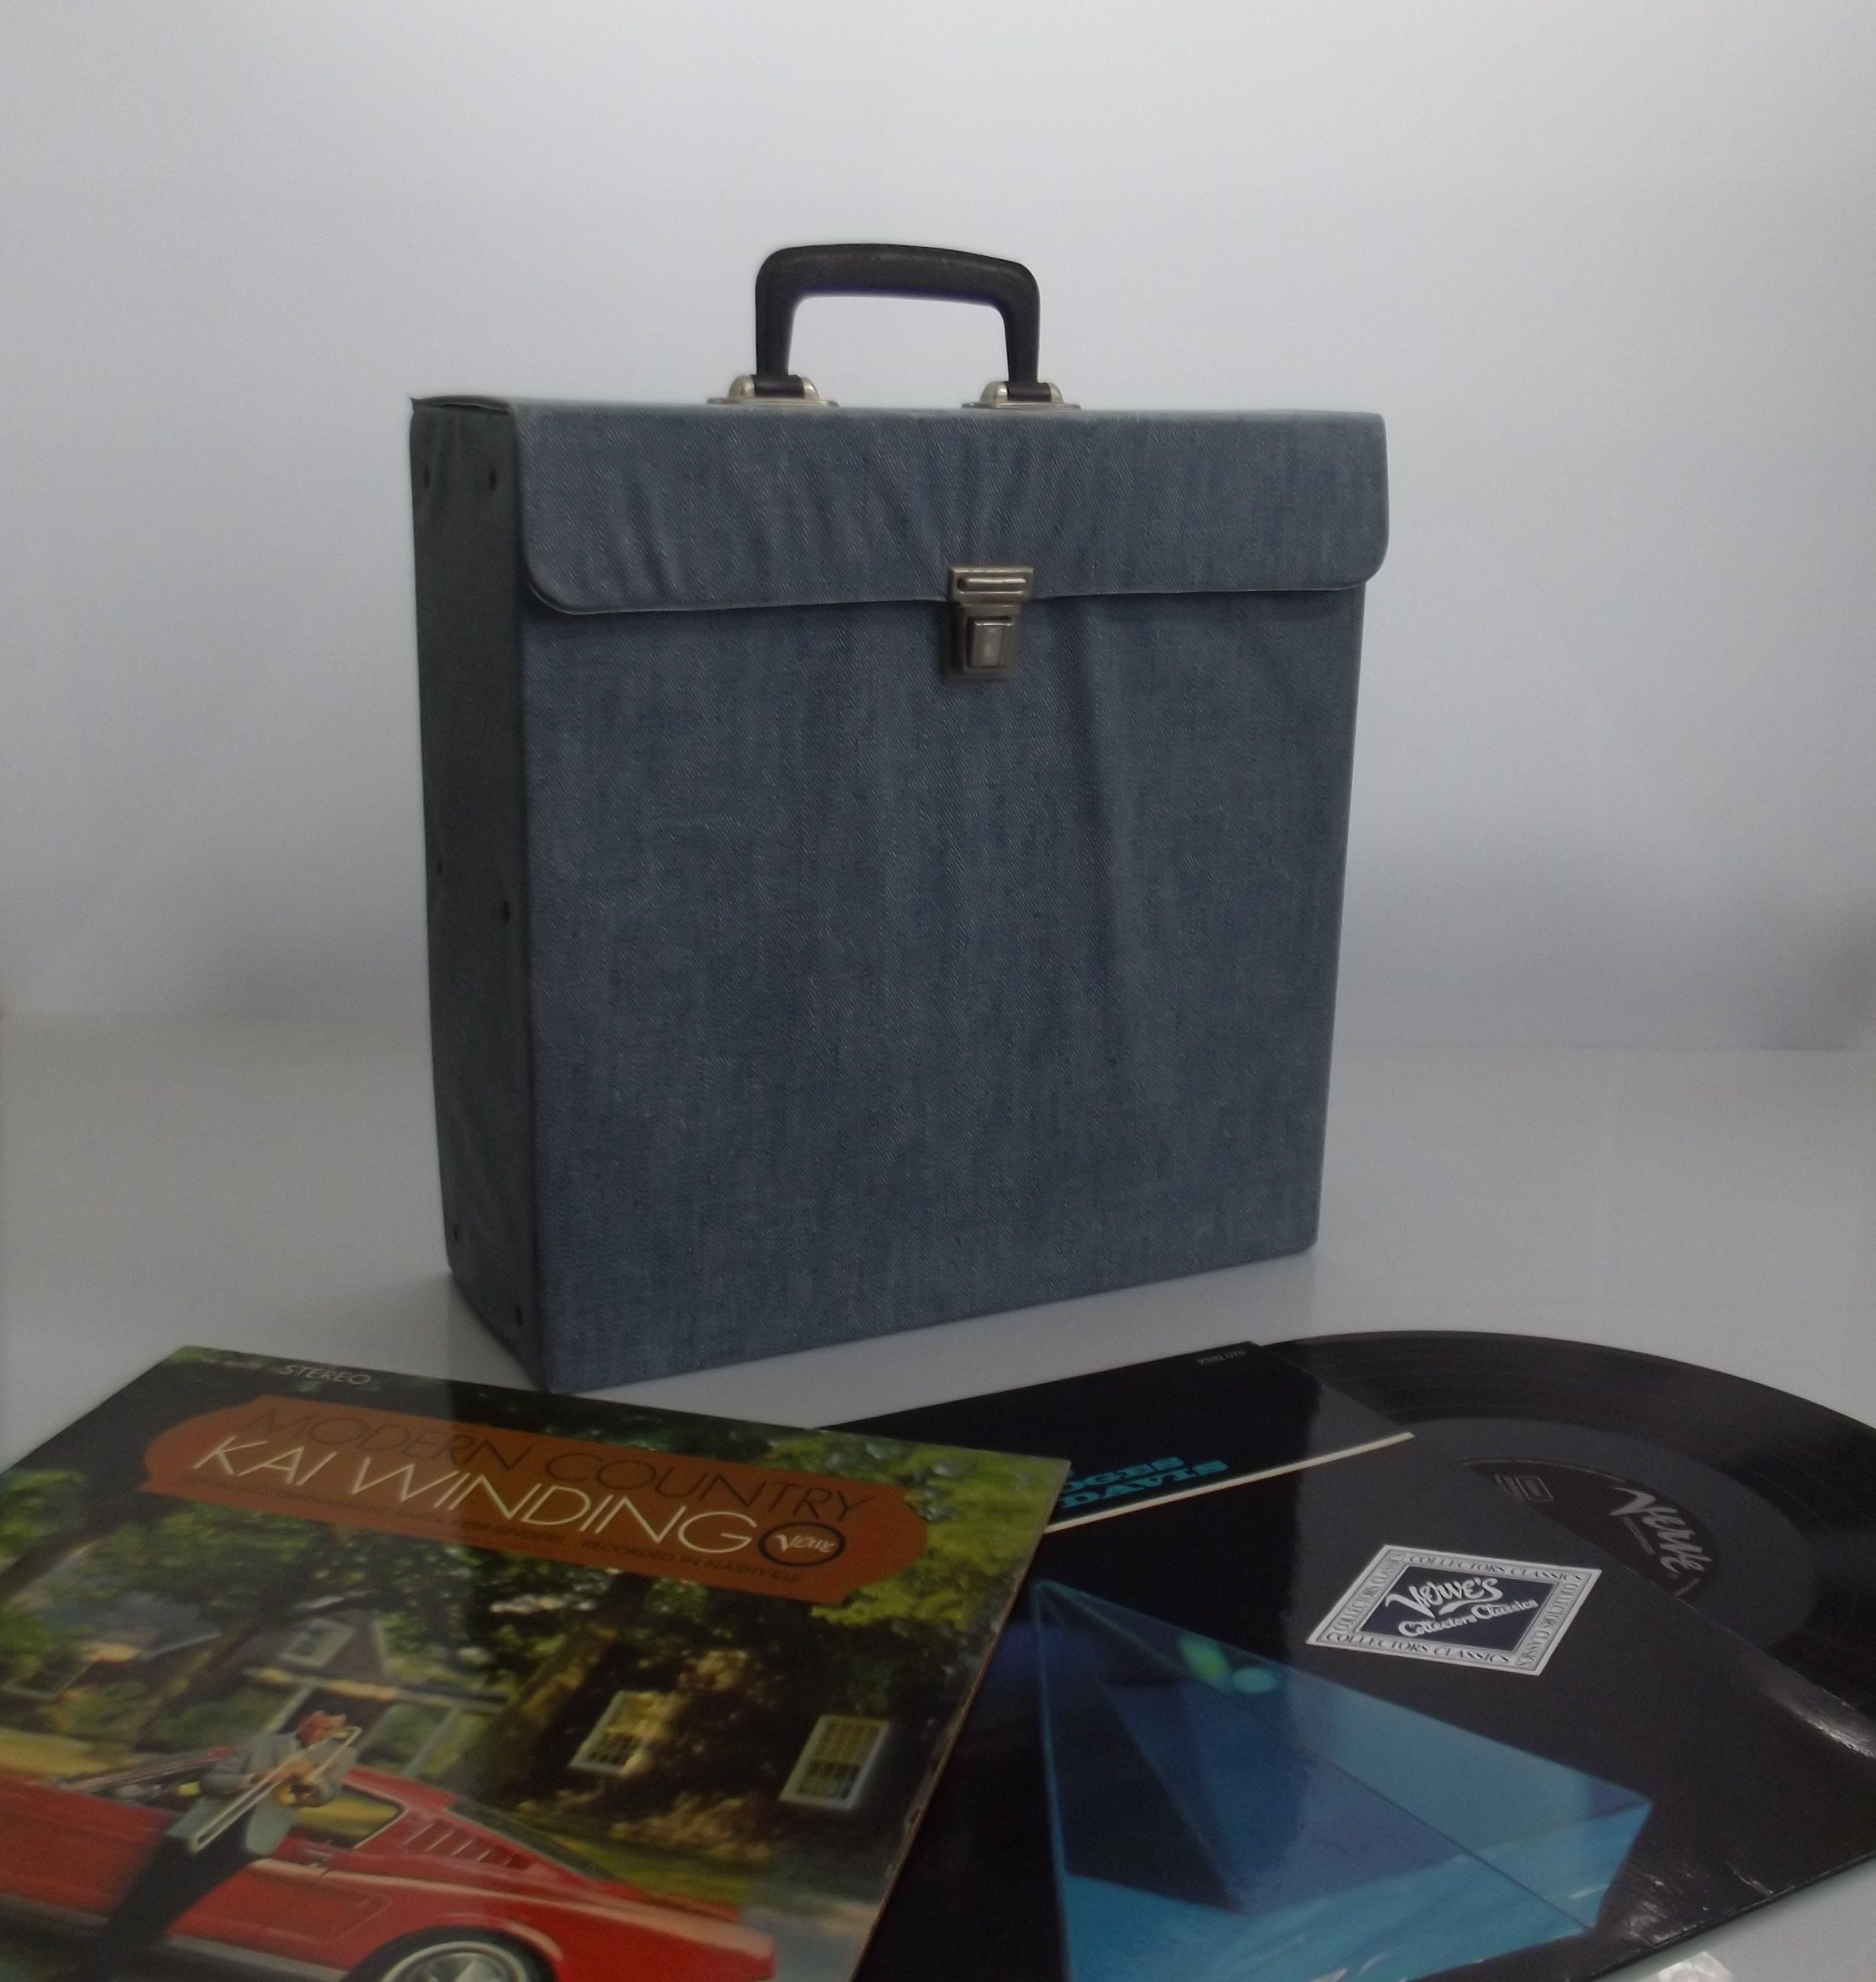 Retro Vinyl Record - Vintage Vinyls LP Record Tote Bag